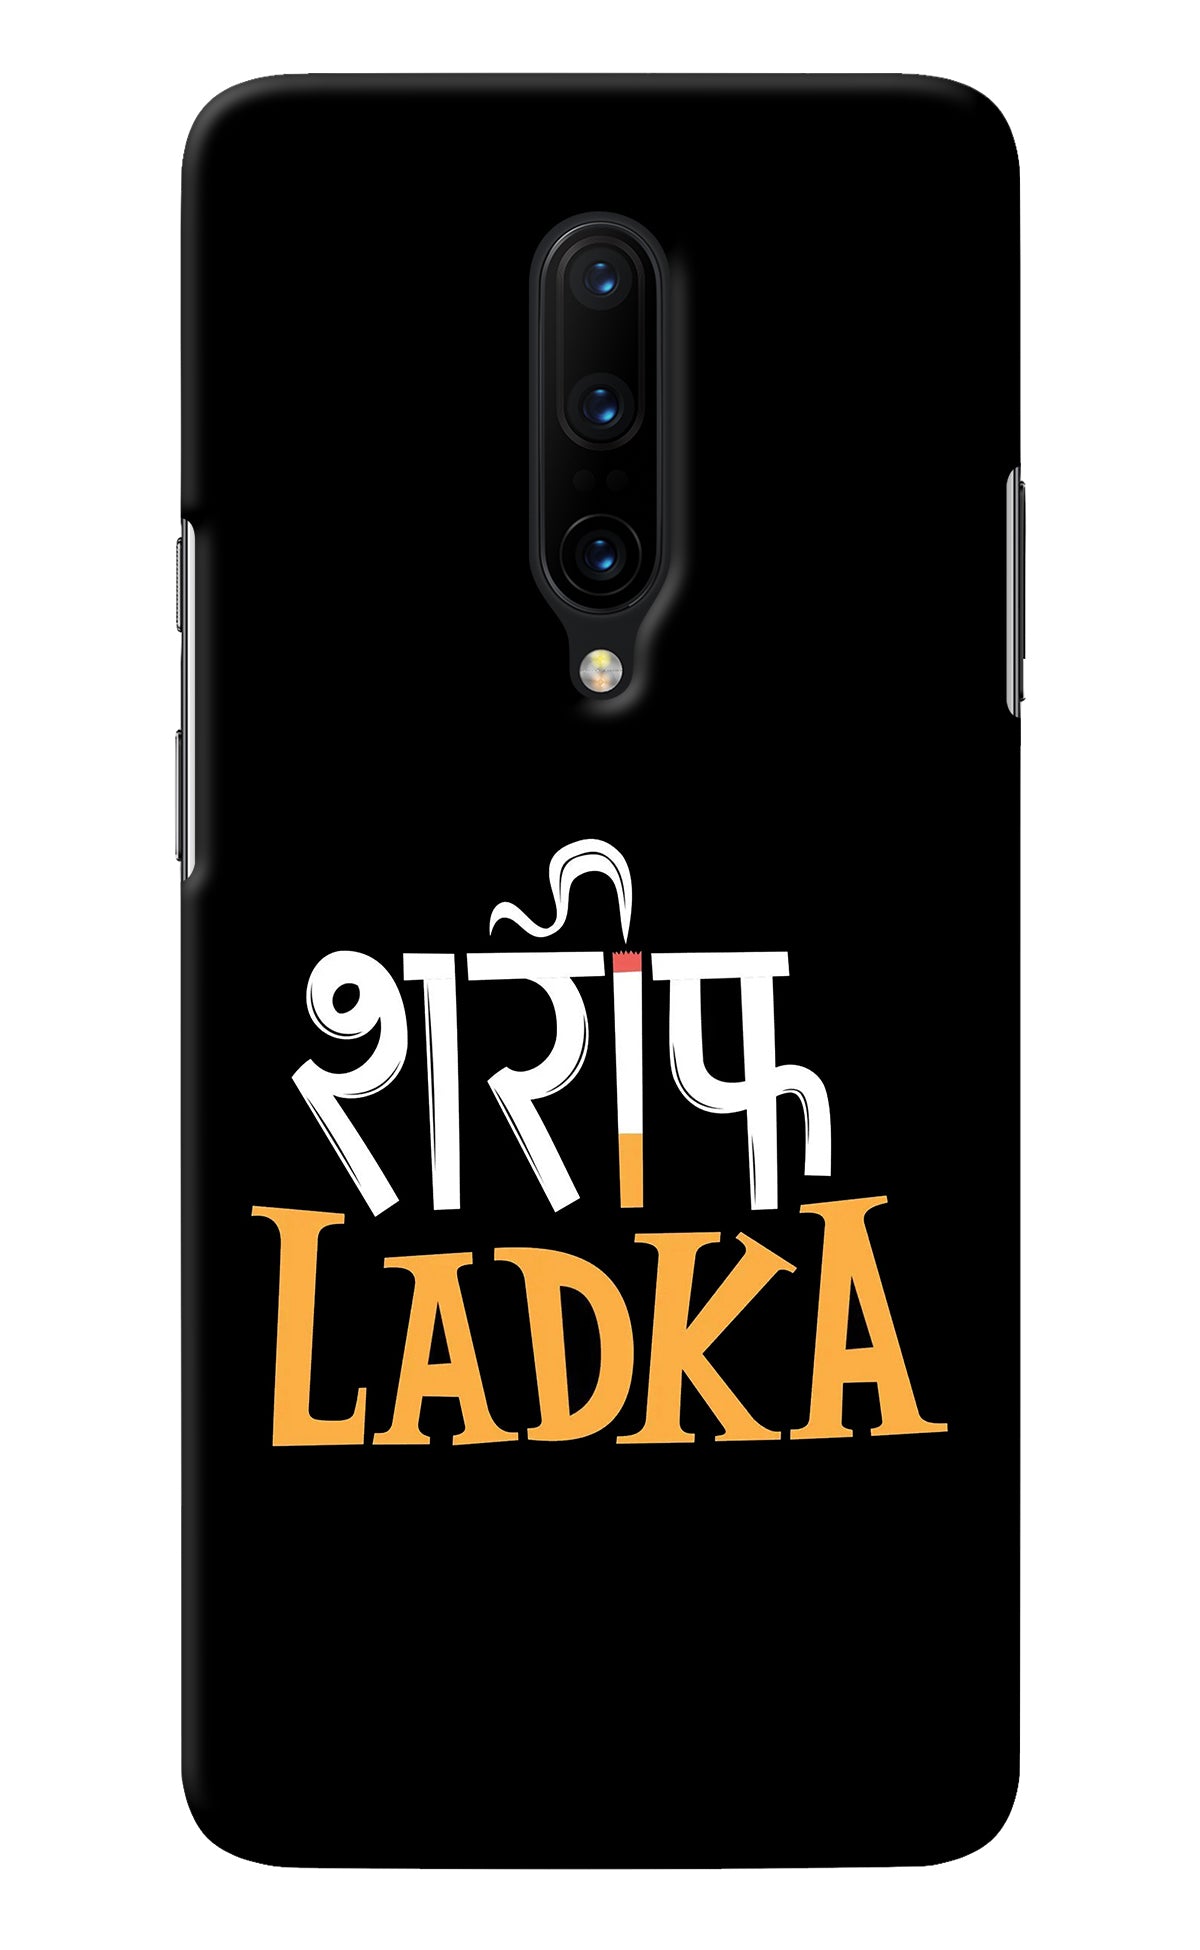 Shareef Ladka Oneplus 7 Pro Back Cover